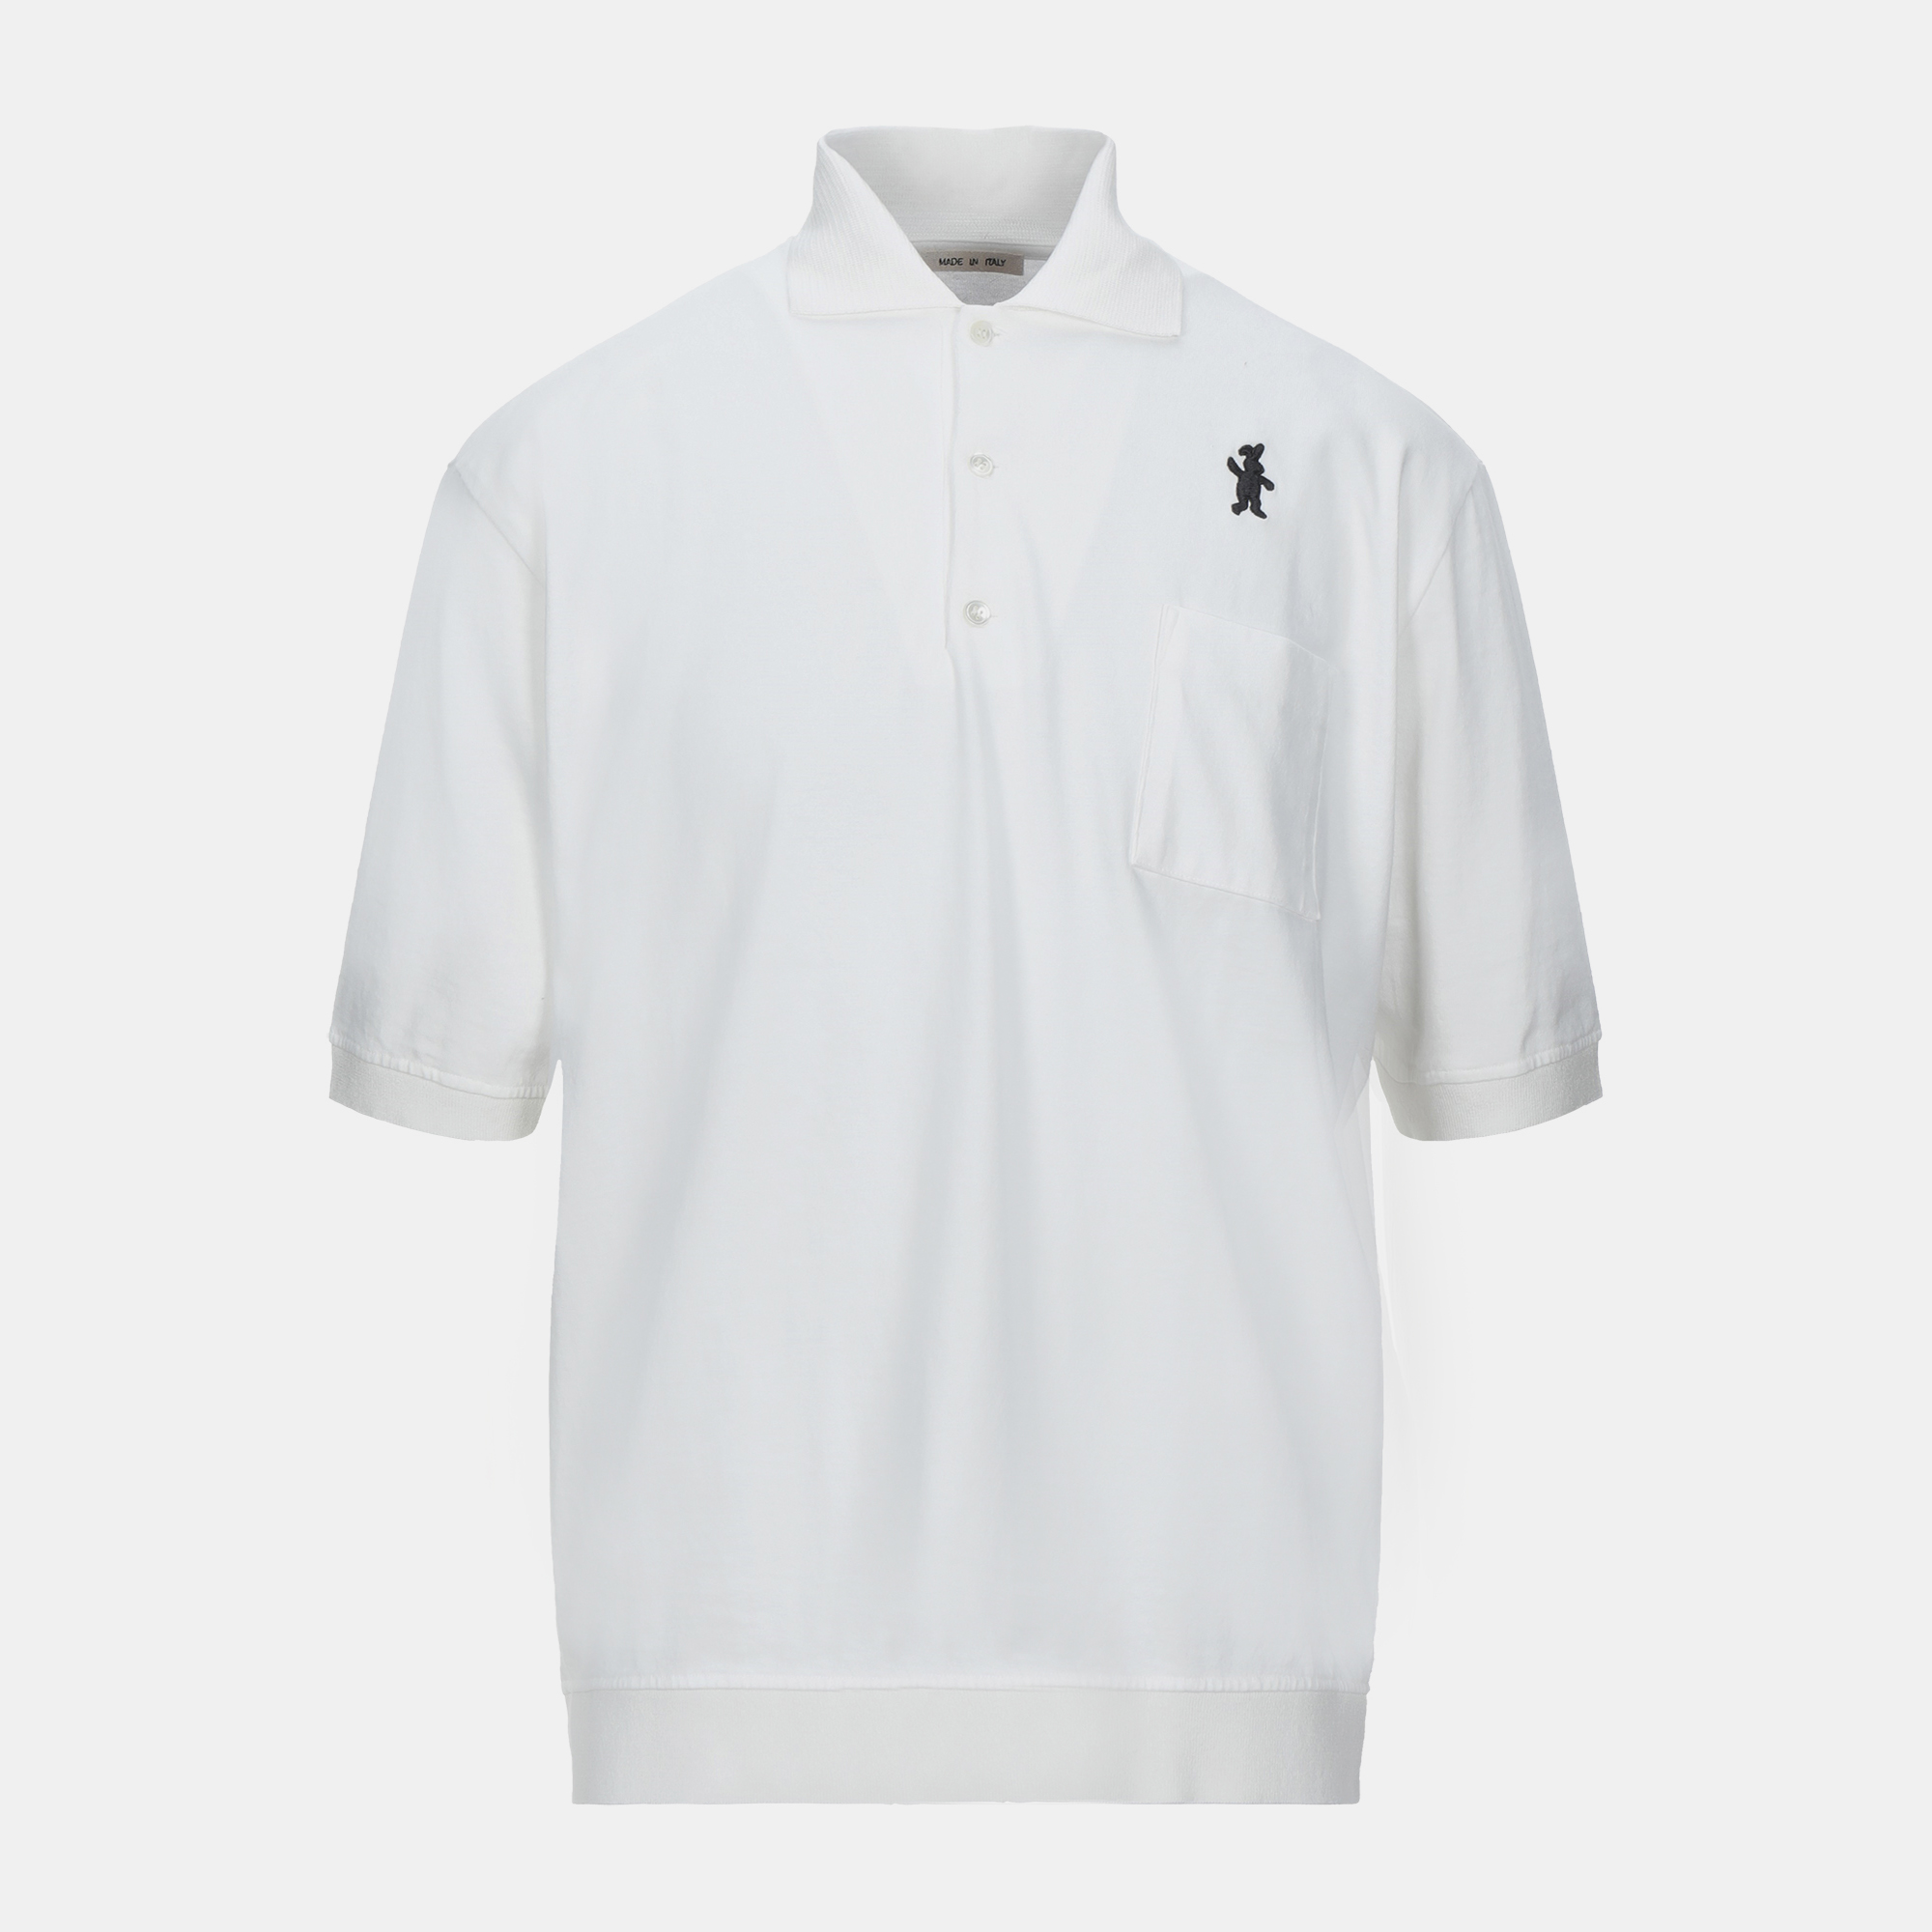 Marni cotton polo shirt 44